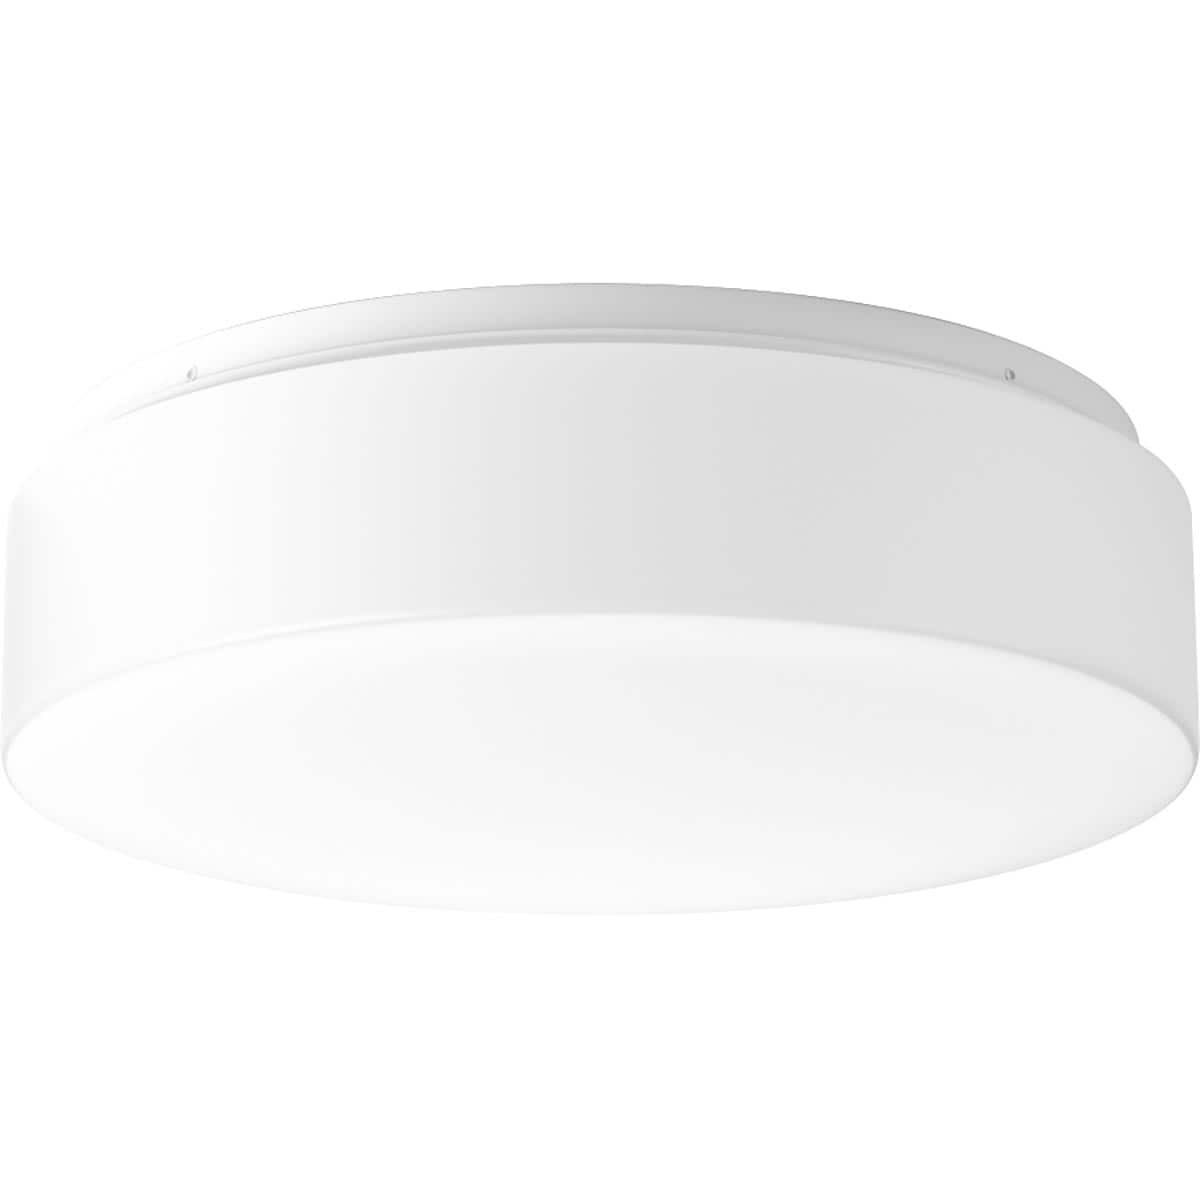 Progress Lighting Drums and Clouds 1-Light 13.5612-in White LED Flush Mount Light ENERGY STAR